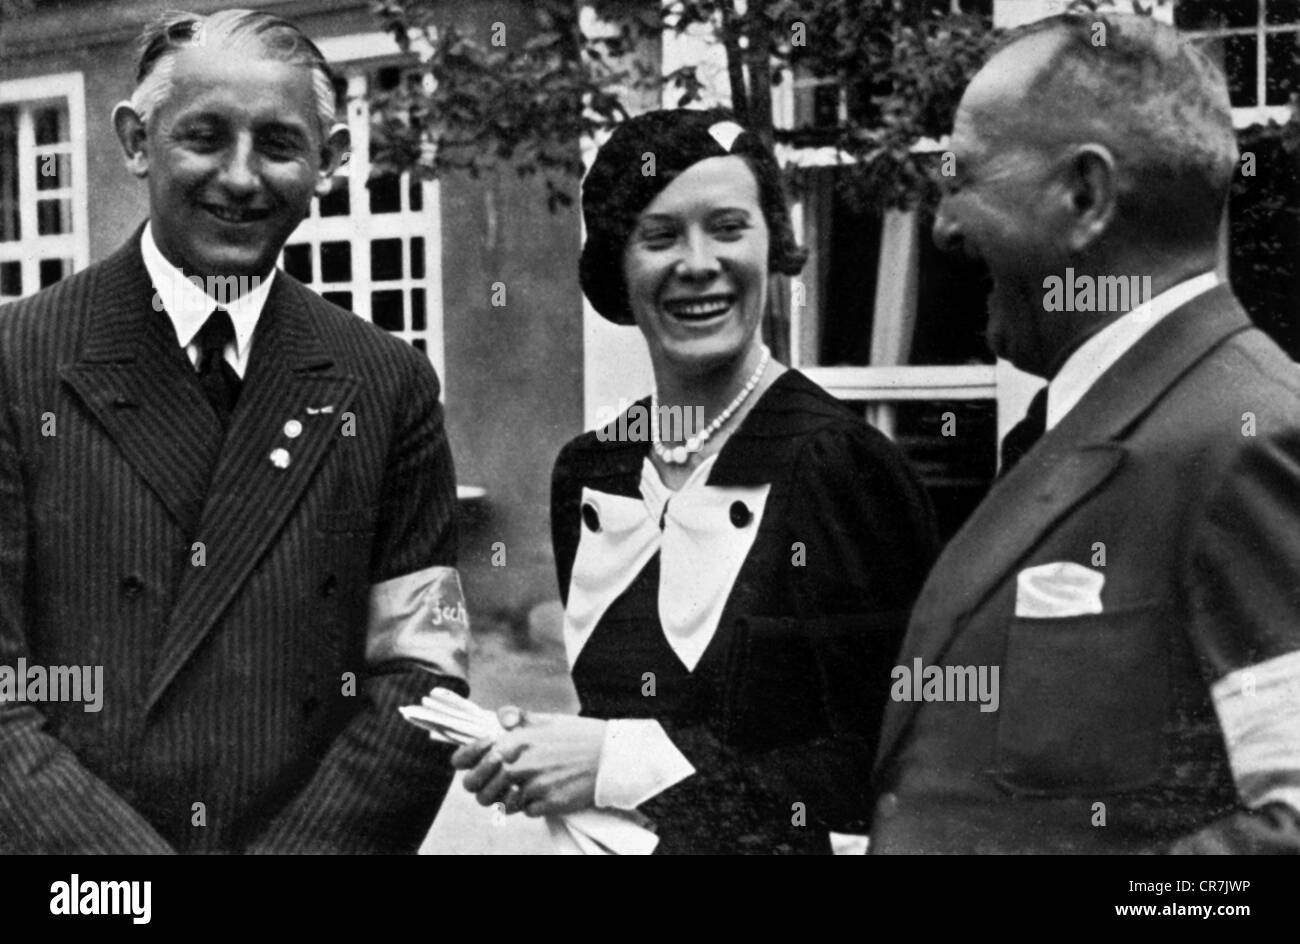 Casmir, Erwin, 2.12.1895 - 19.4.1982, German fencer (left), with Hedwig Haas and Erckrath de Bary, circa 1935, Stock Photo